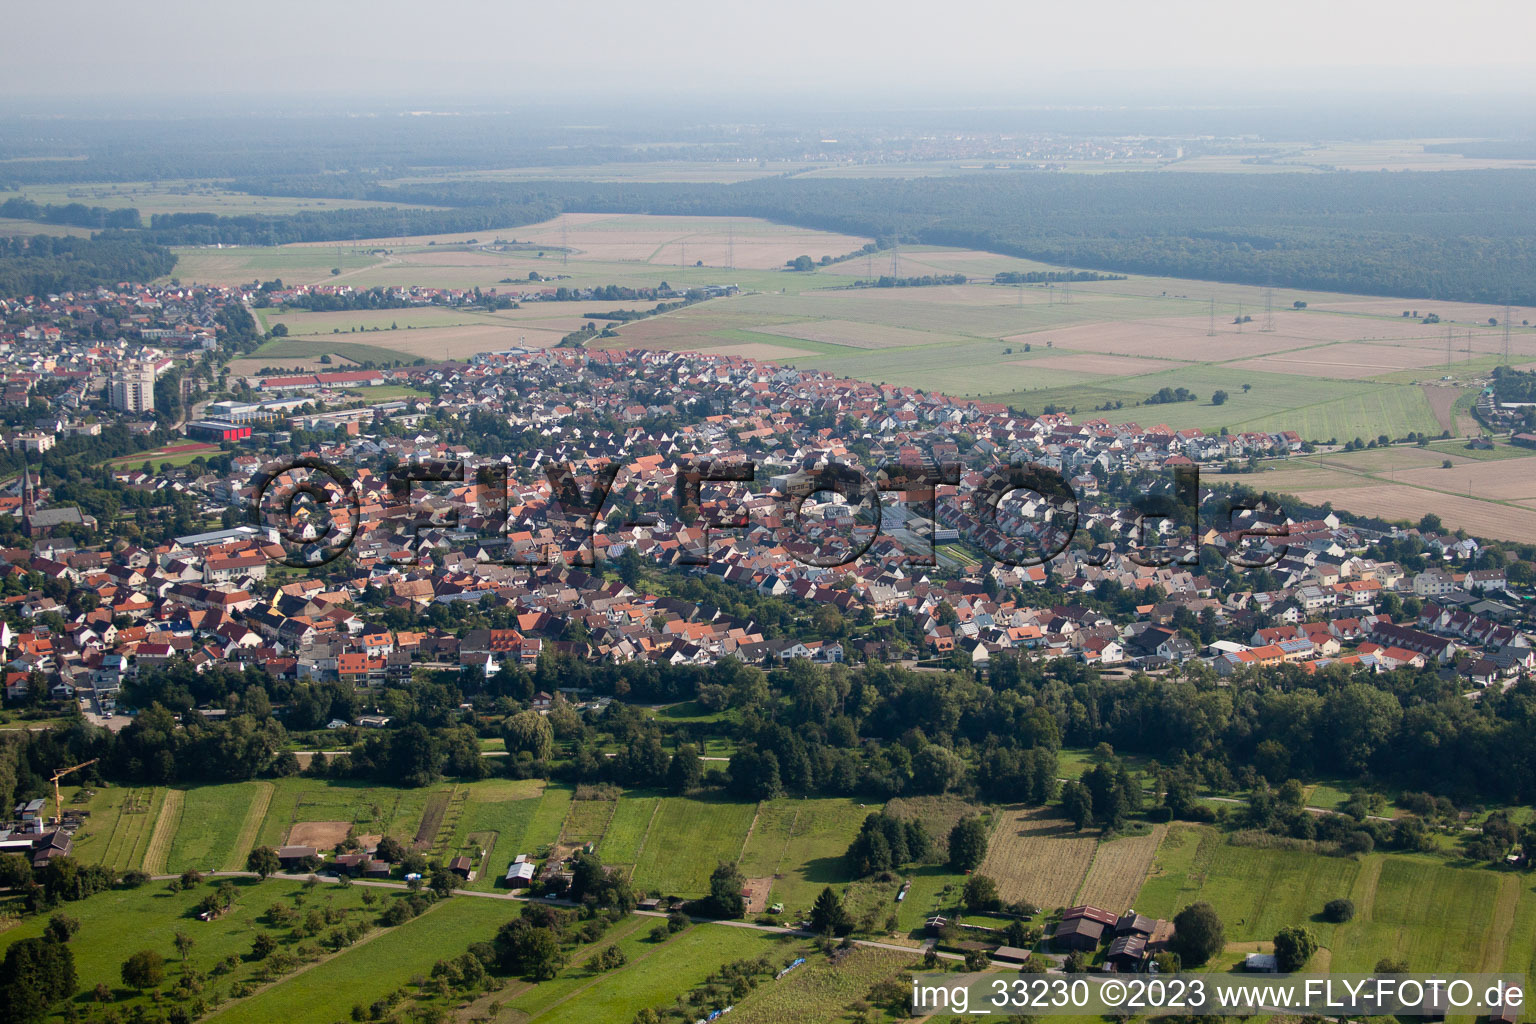 District Linkenheim in Linkenheim-Hochstetten in the state Baden-Wuerttemberg, Germany seen from above